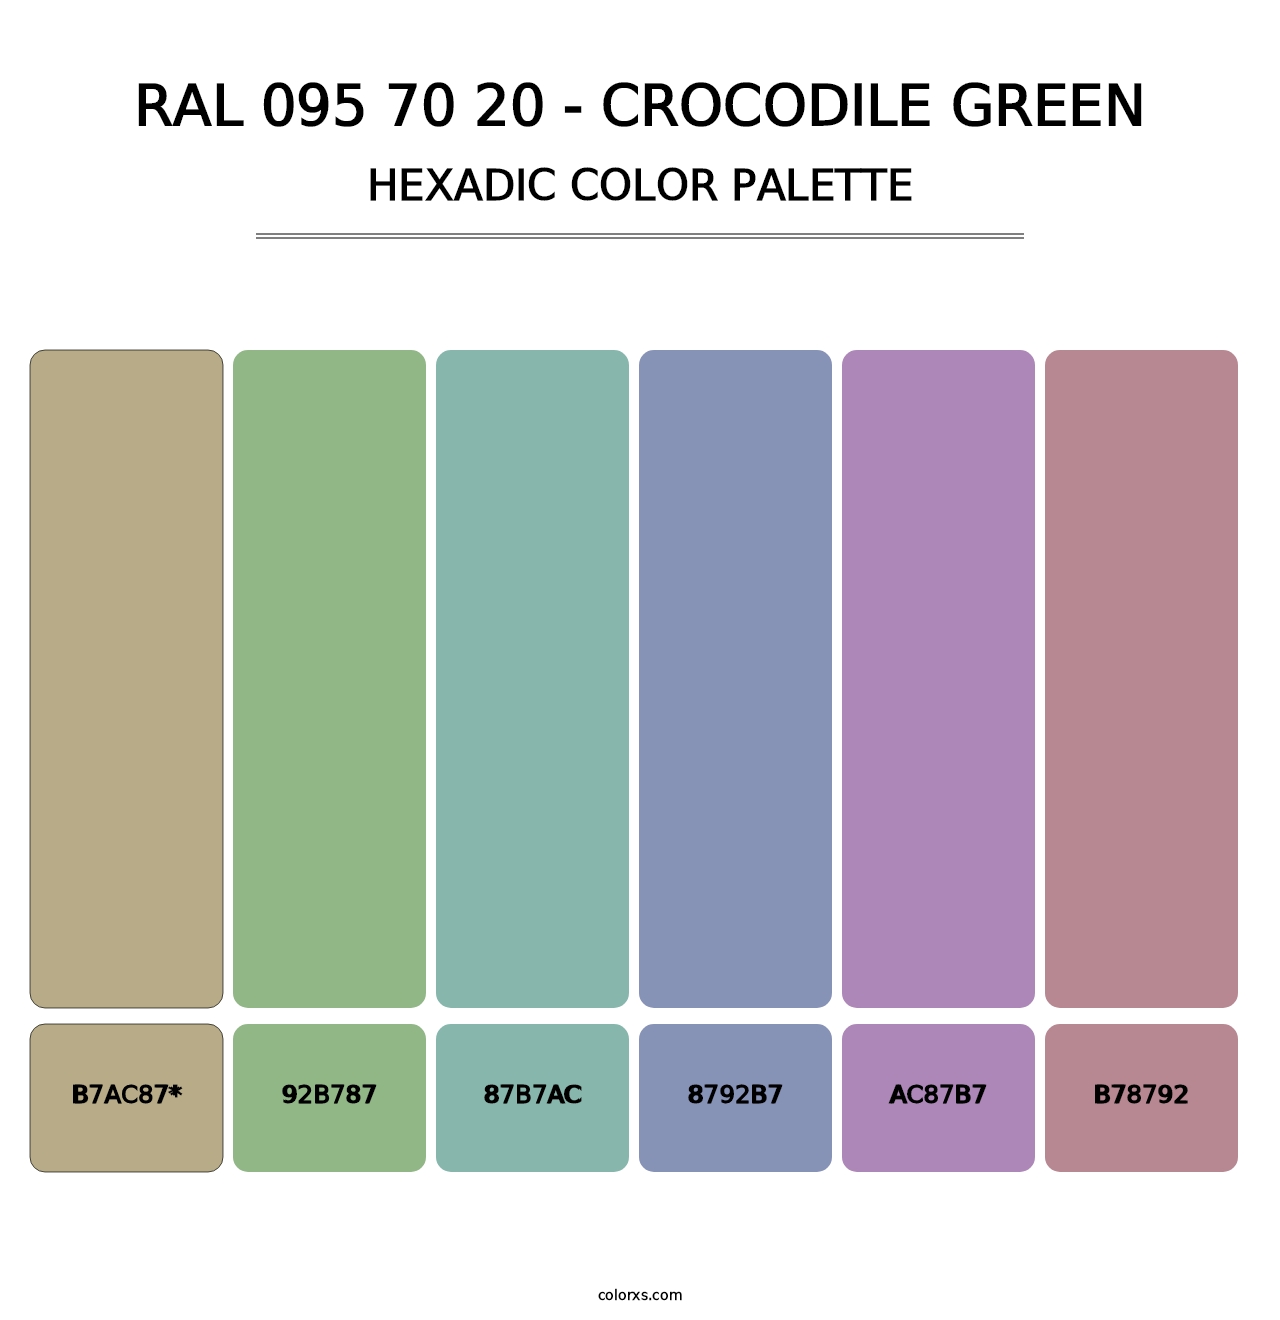 RAL 095 70 20 - Crocodile Green - Hexadic Color Palette